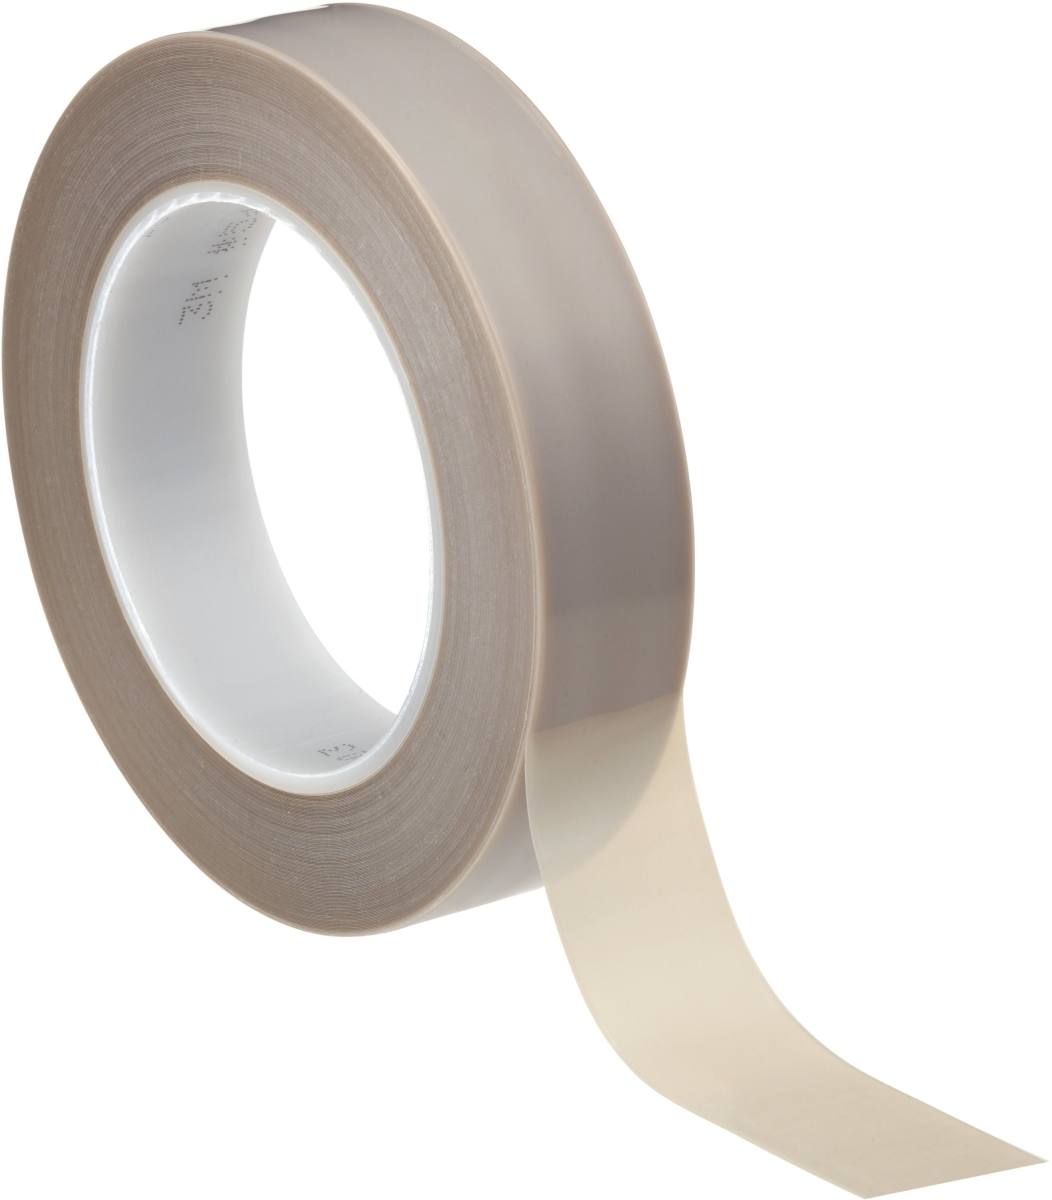 3M 5481 PTFE film adhesive tape 6mmx33m, 0.17mm, silicone